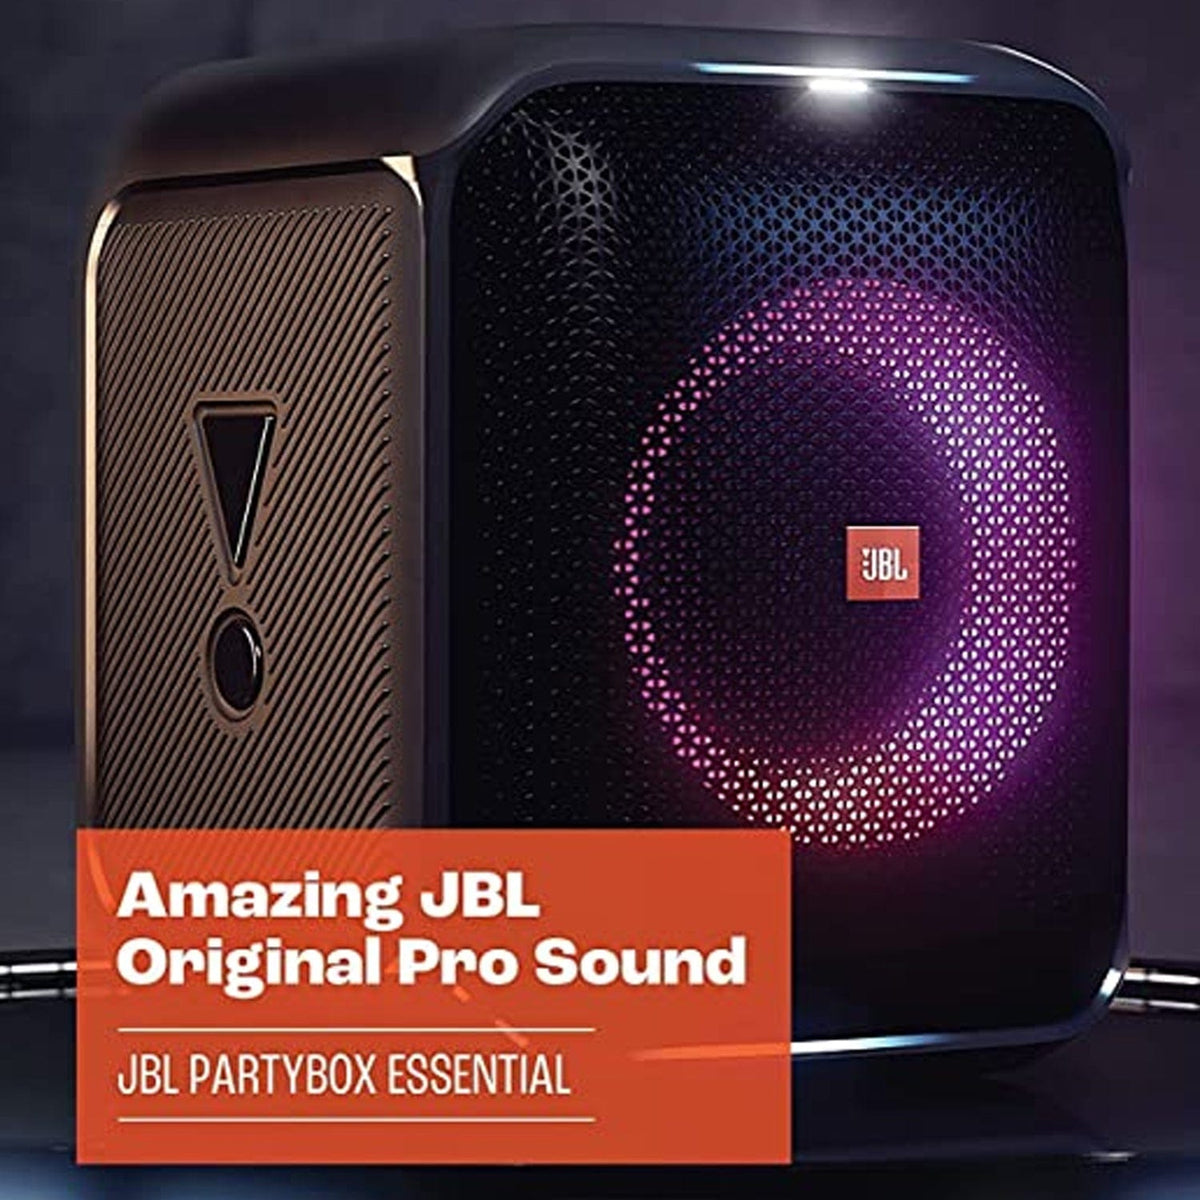 100% Original JBL PULSE 5 PULSE5 Portable Bluetooth Speaker IP67 Dustproof  & Waterproof Speakers Deep Bass PartyBox Support App - AliExpress